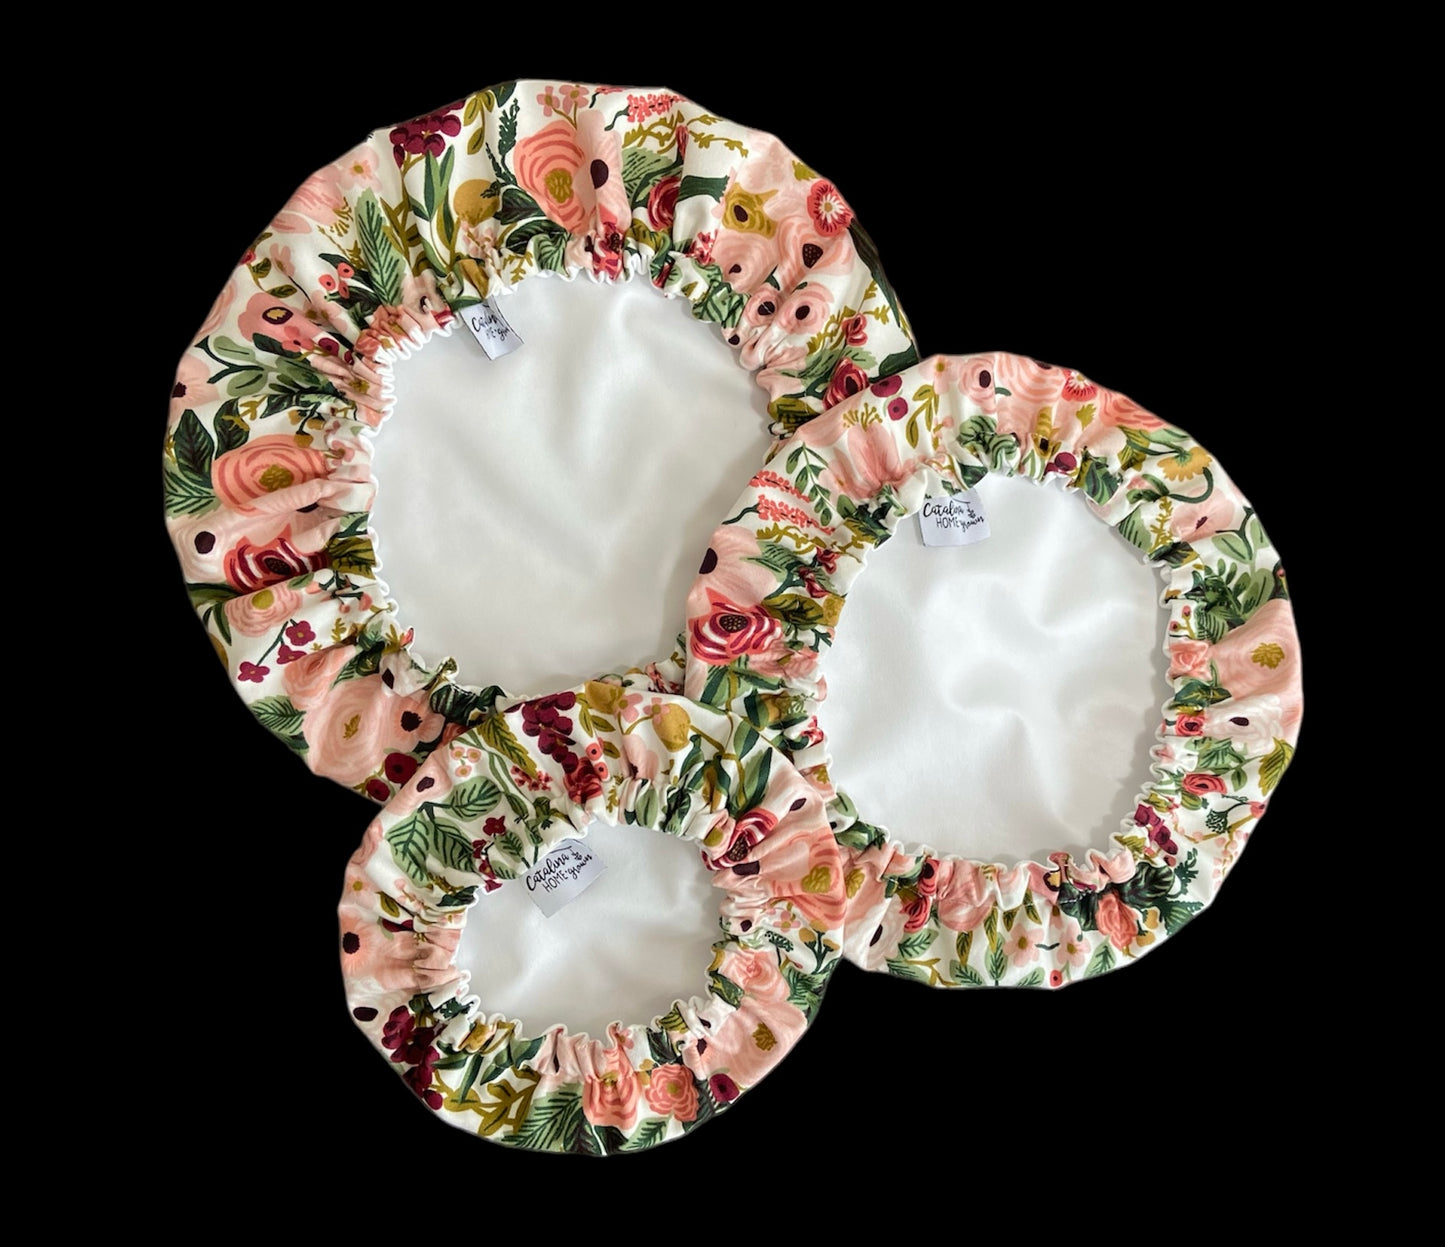 Reusable Bowl Cover (Garden Party pink floral fabric)